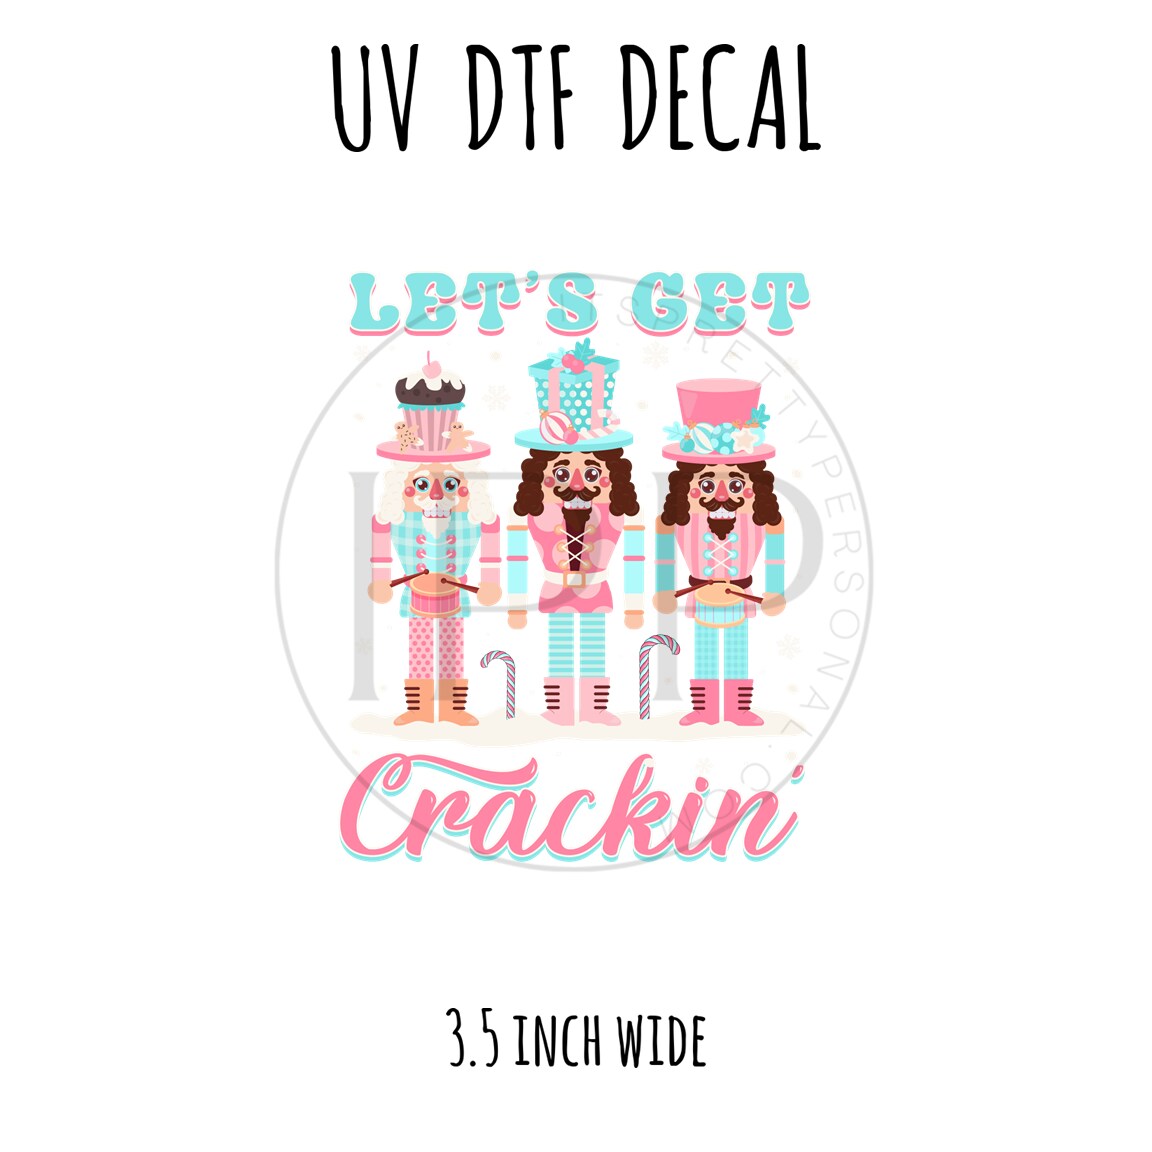 221- Let's Get Crackin - 3.5 inch wide UV DTF decal